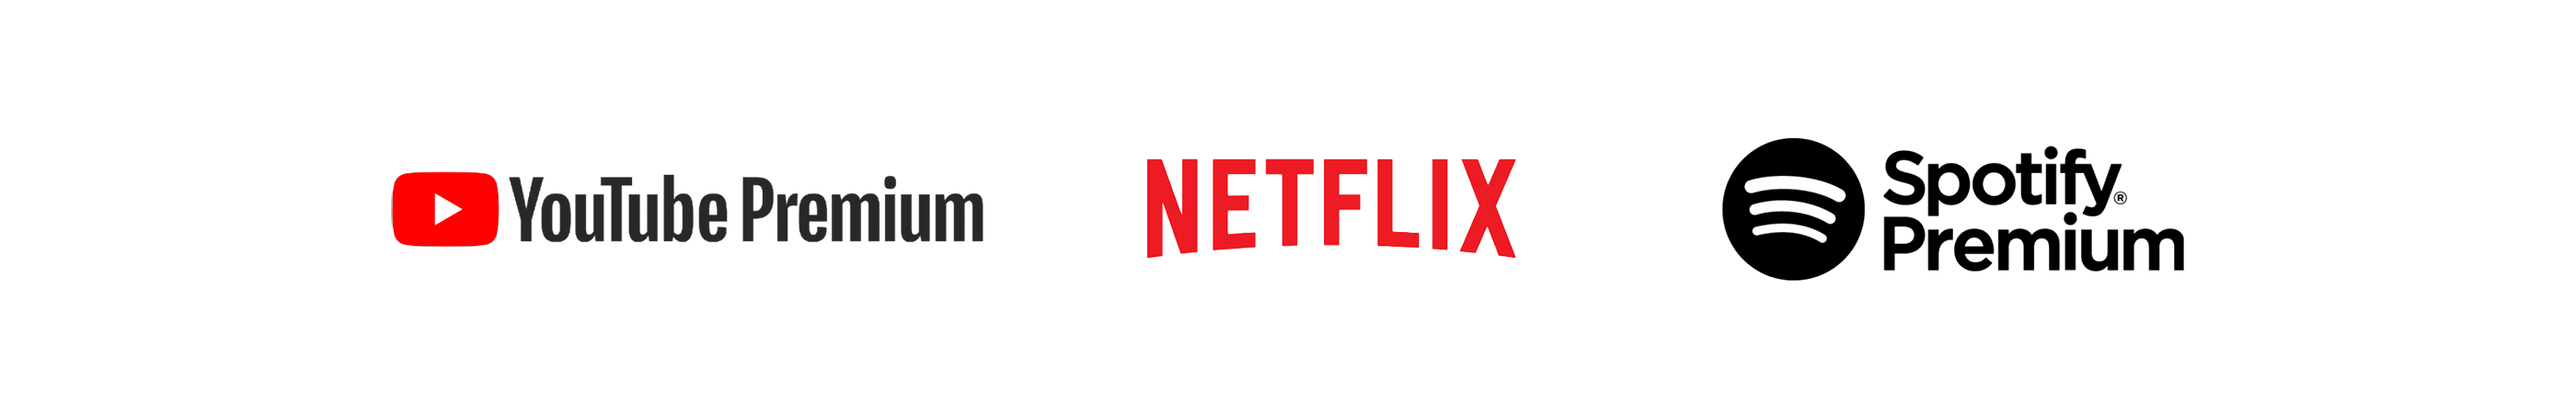 YouTube Premium, Netflix and Spotify Premium logos